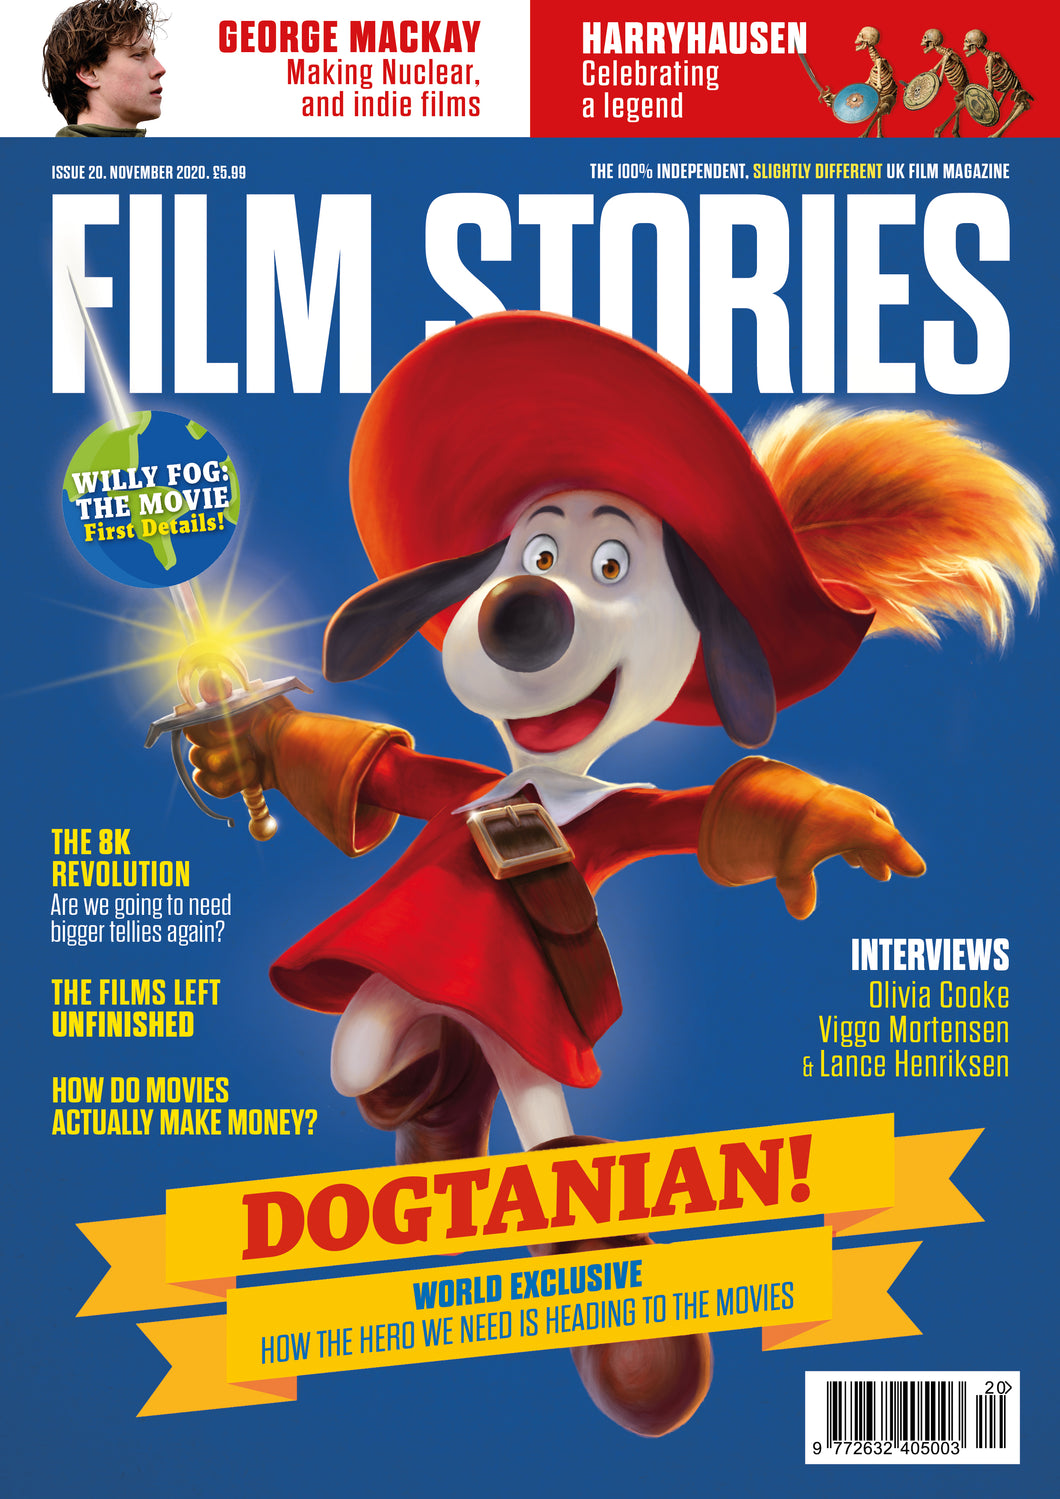 Film Stories issue 20 DIGITAL EDITION (November 2020)